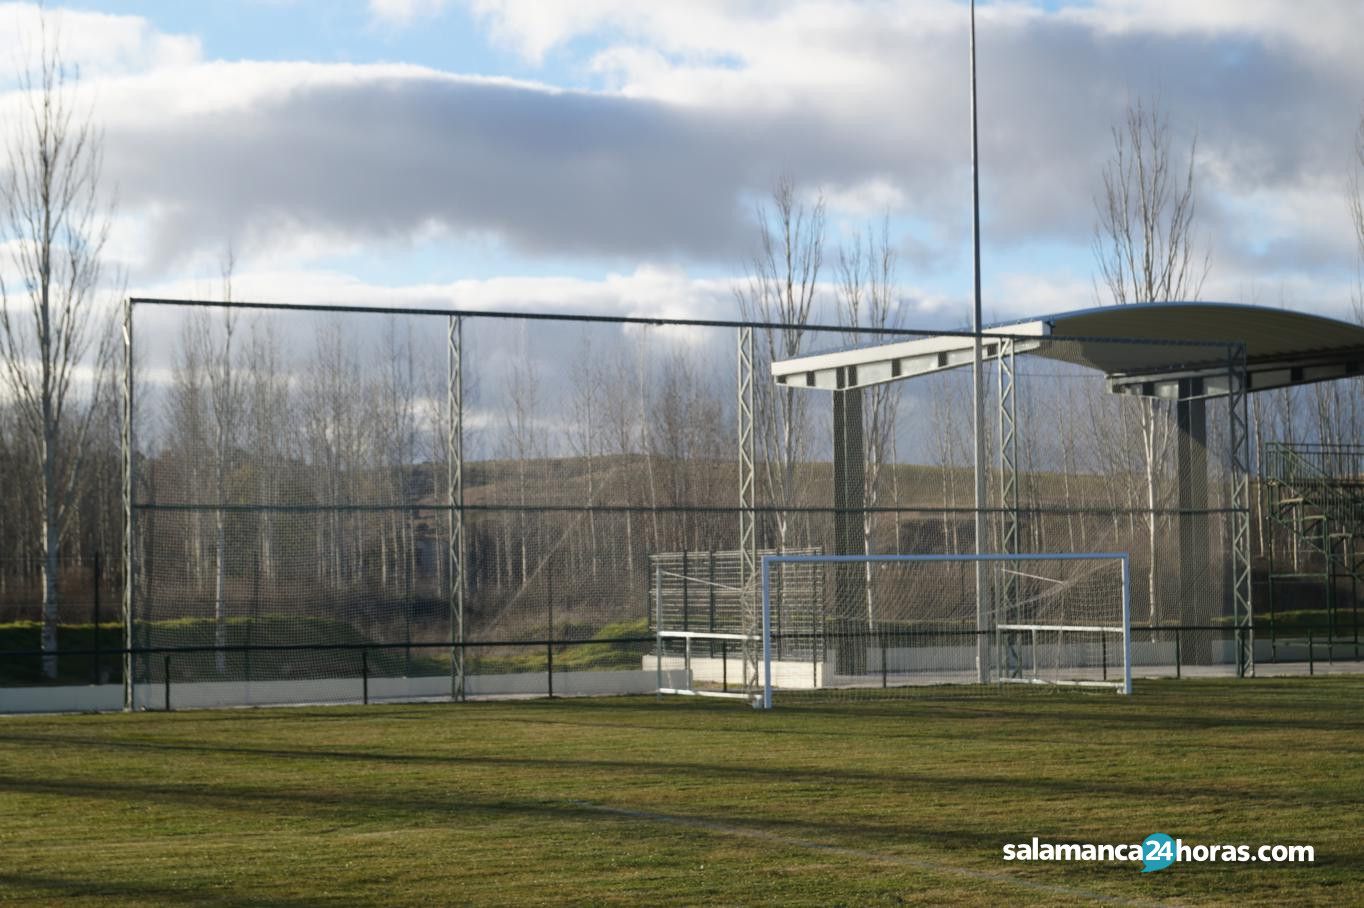  Campo de fútbol Alba de Tormes (10) 